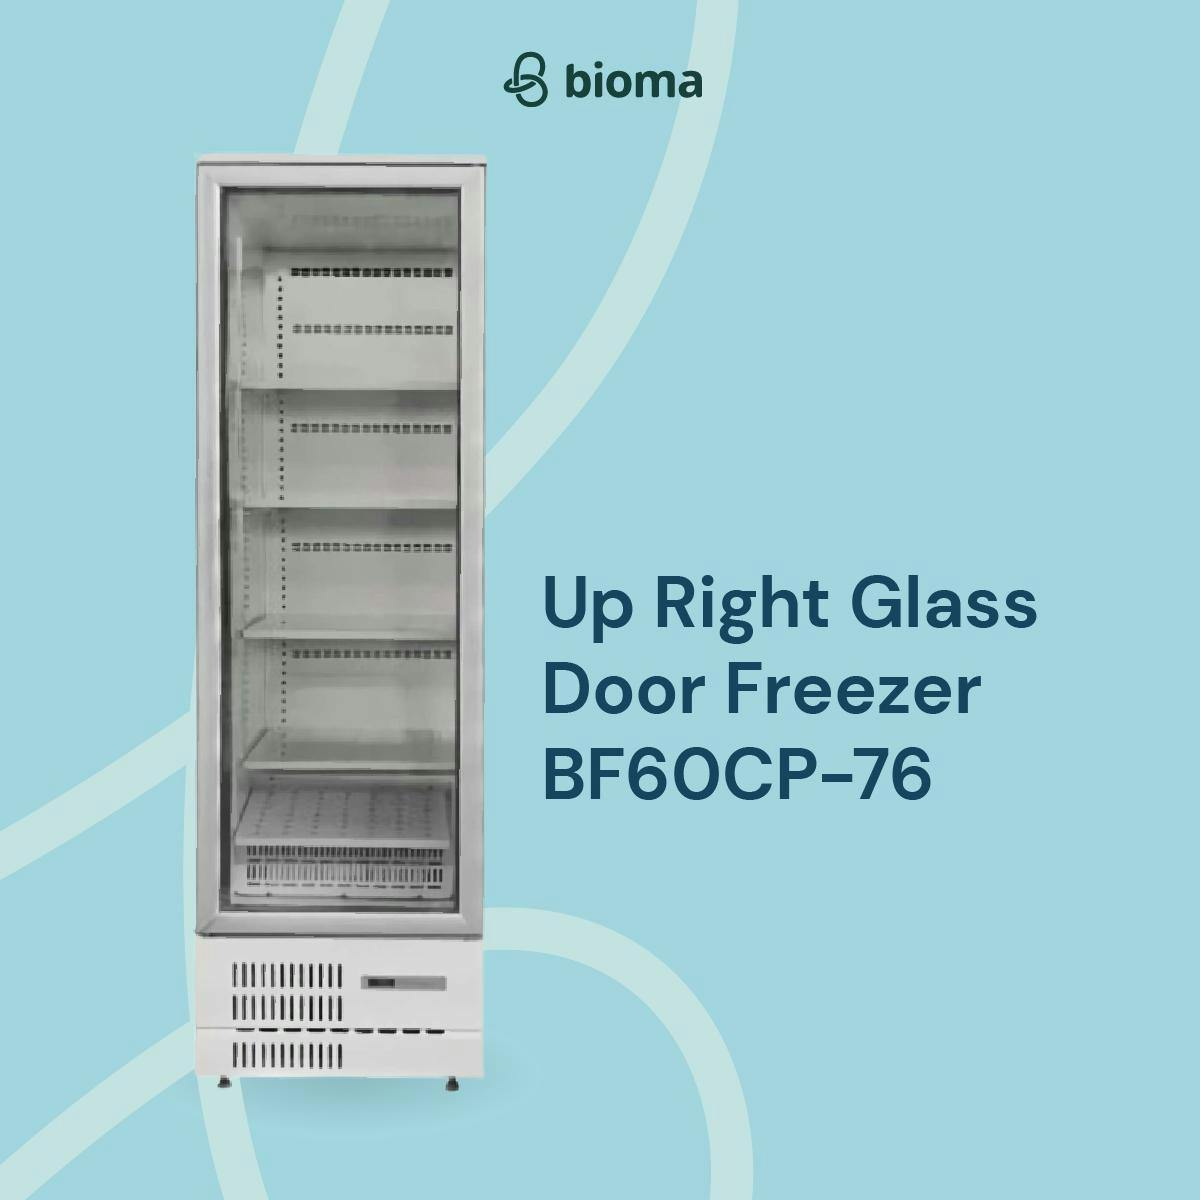 Up Right Glass Door Freezer BF60CP-76